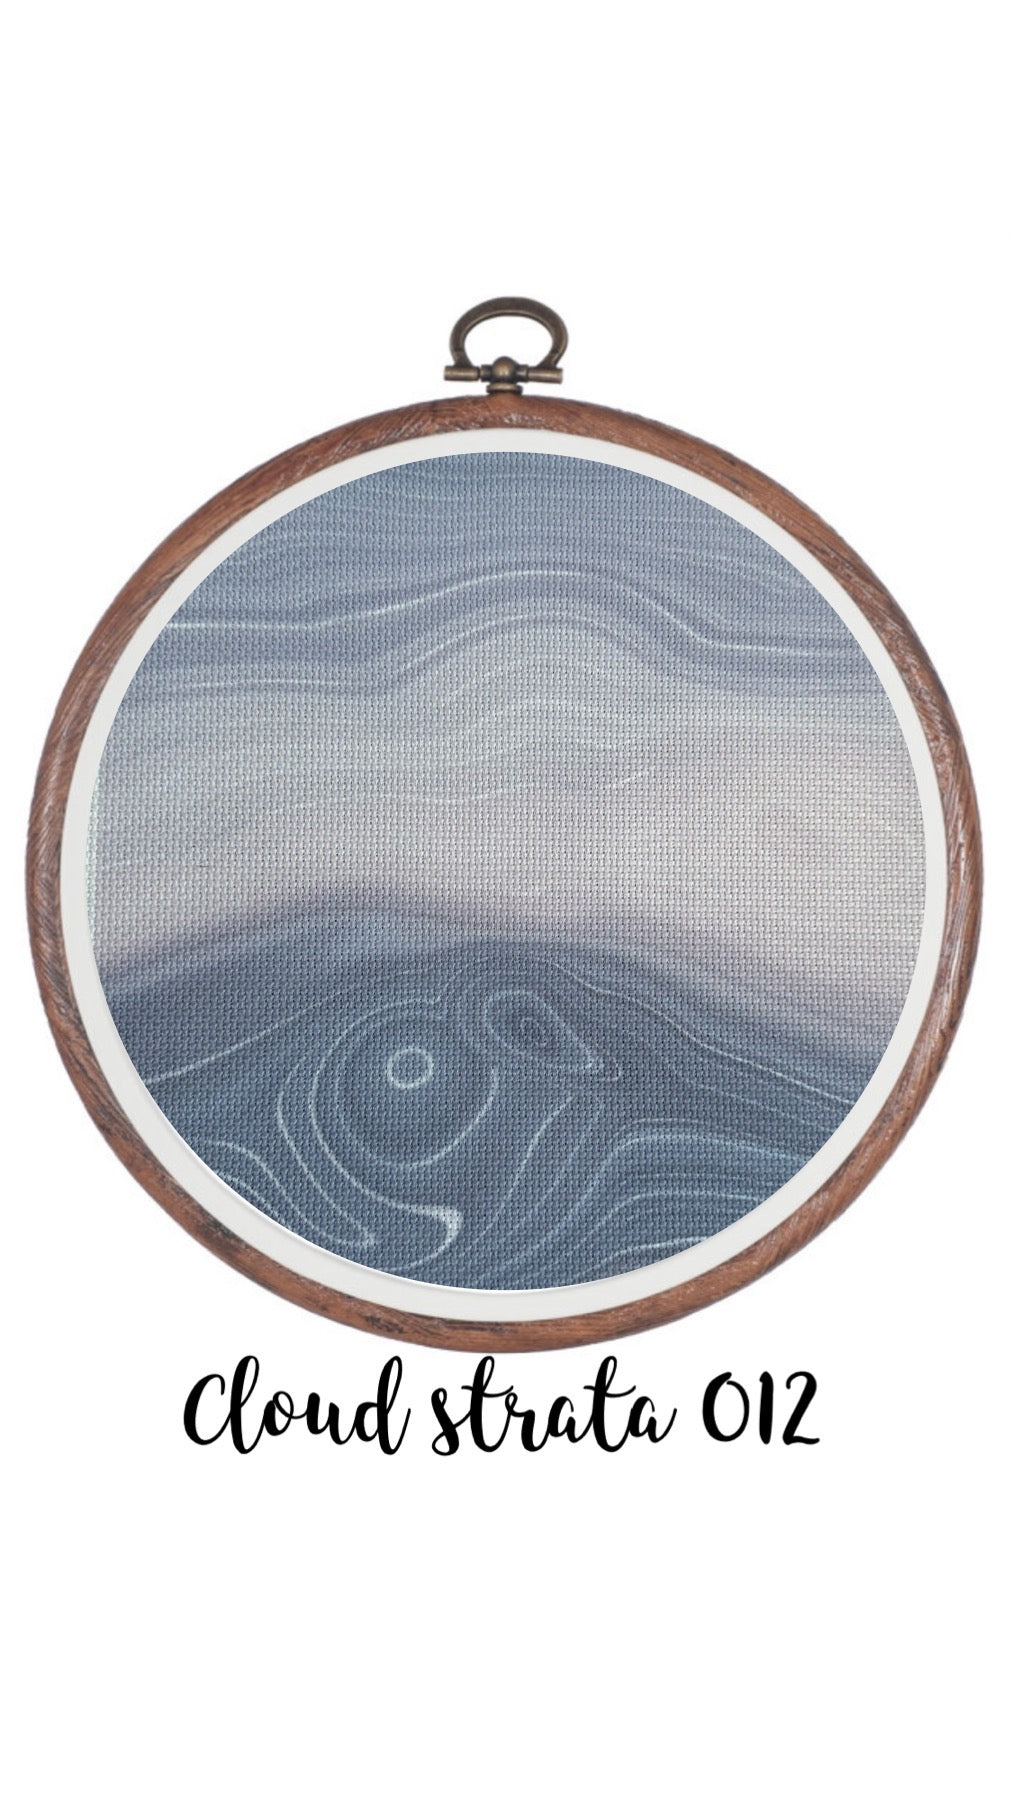 Cloud Strata 012 Aida Cloth || Hand Dyed Effect Aida Canvas || Cross Stitching